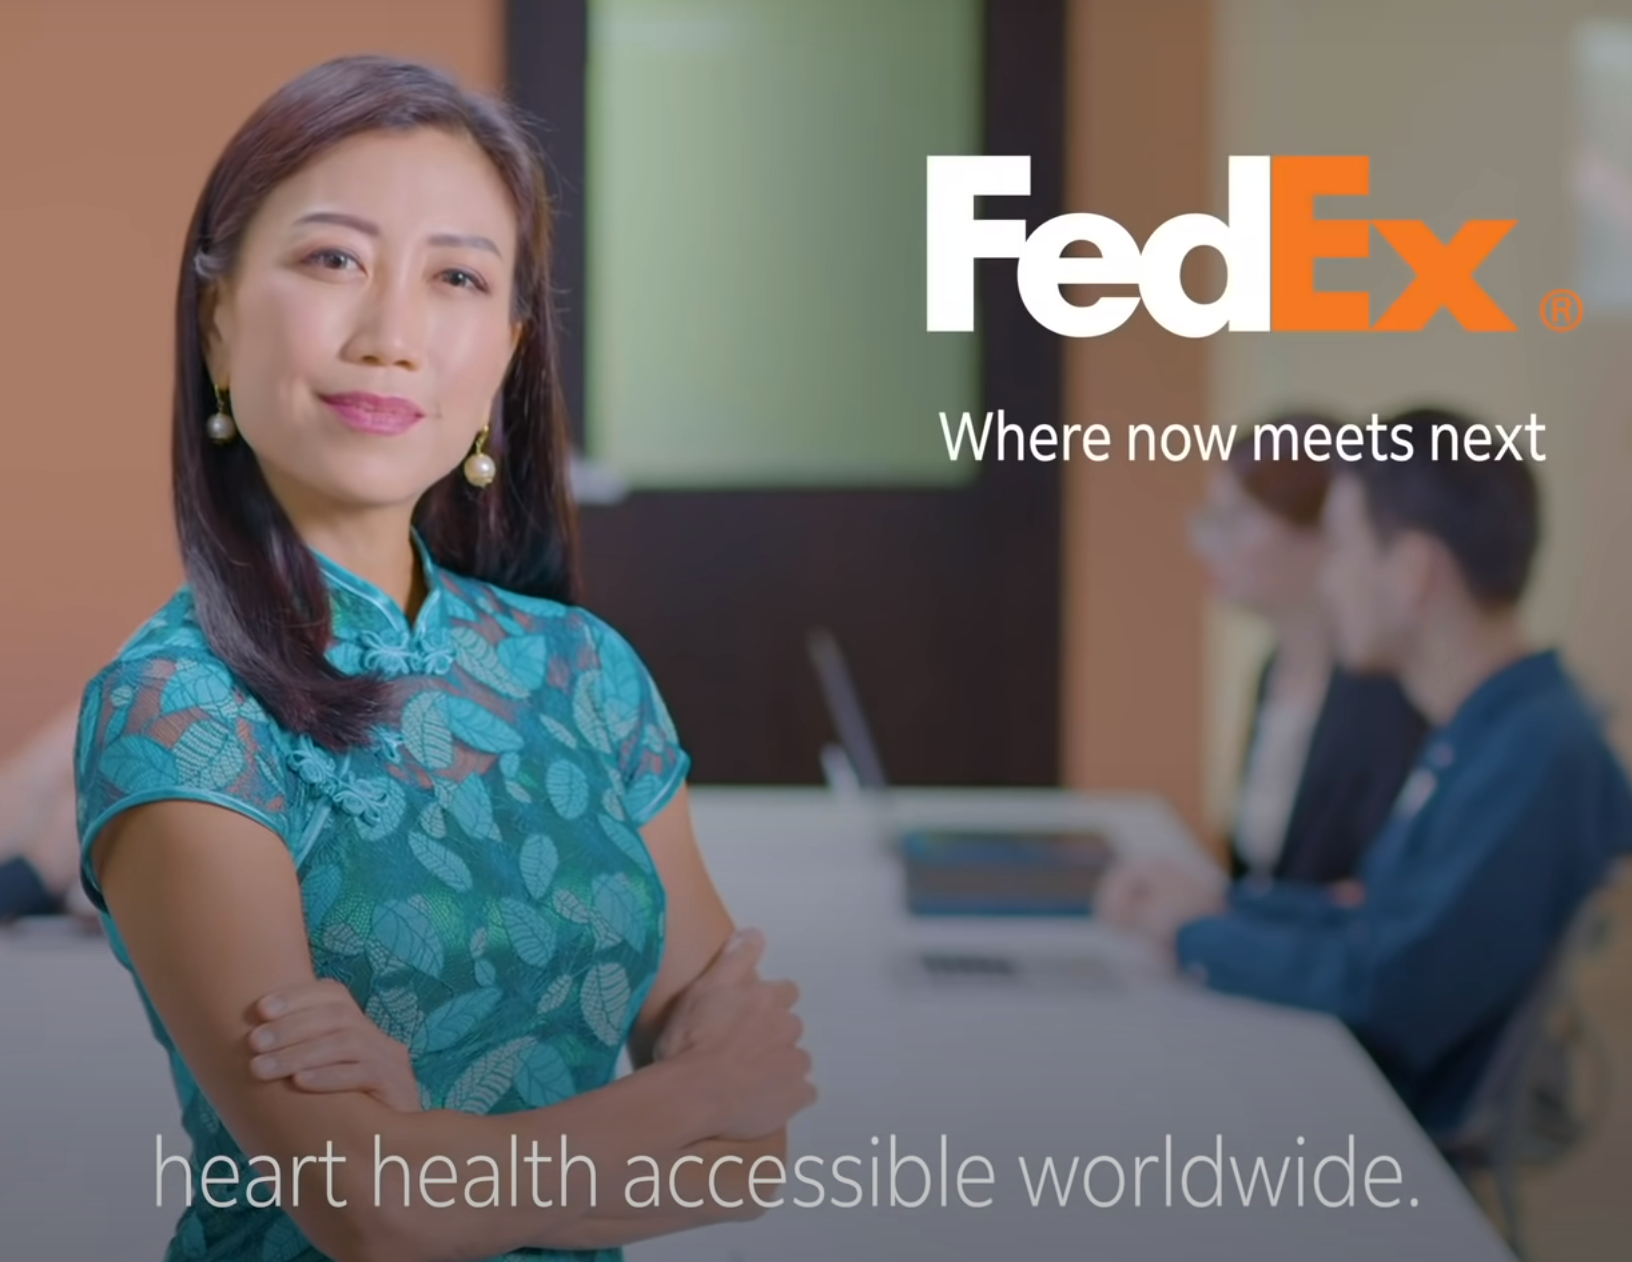 Heart health access worldwide